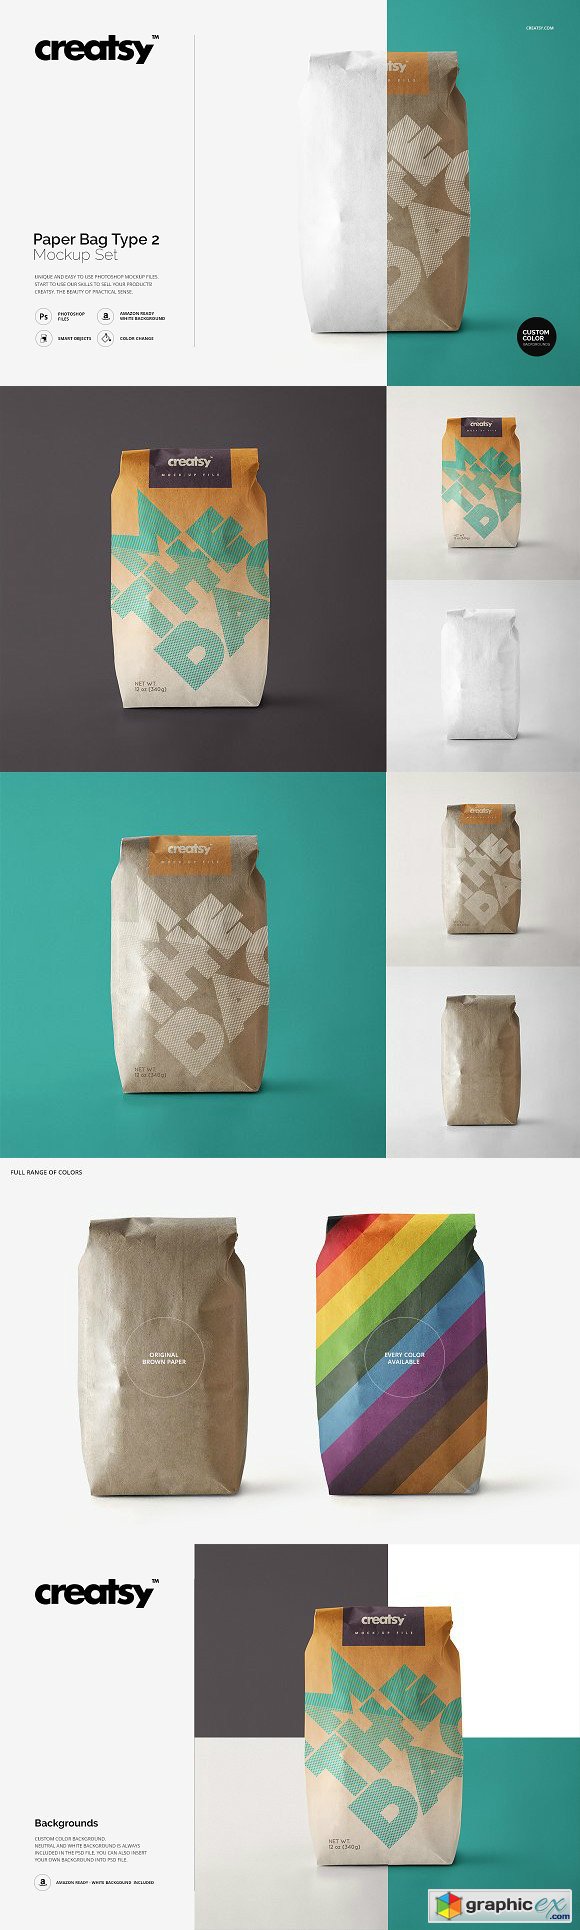 Paper Bag Type 2 Mockup Set